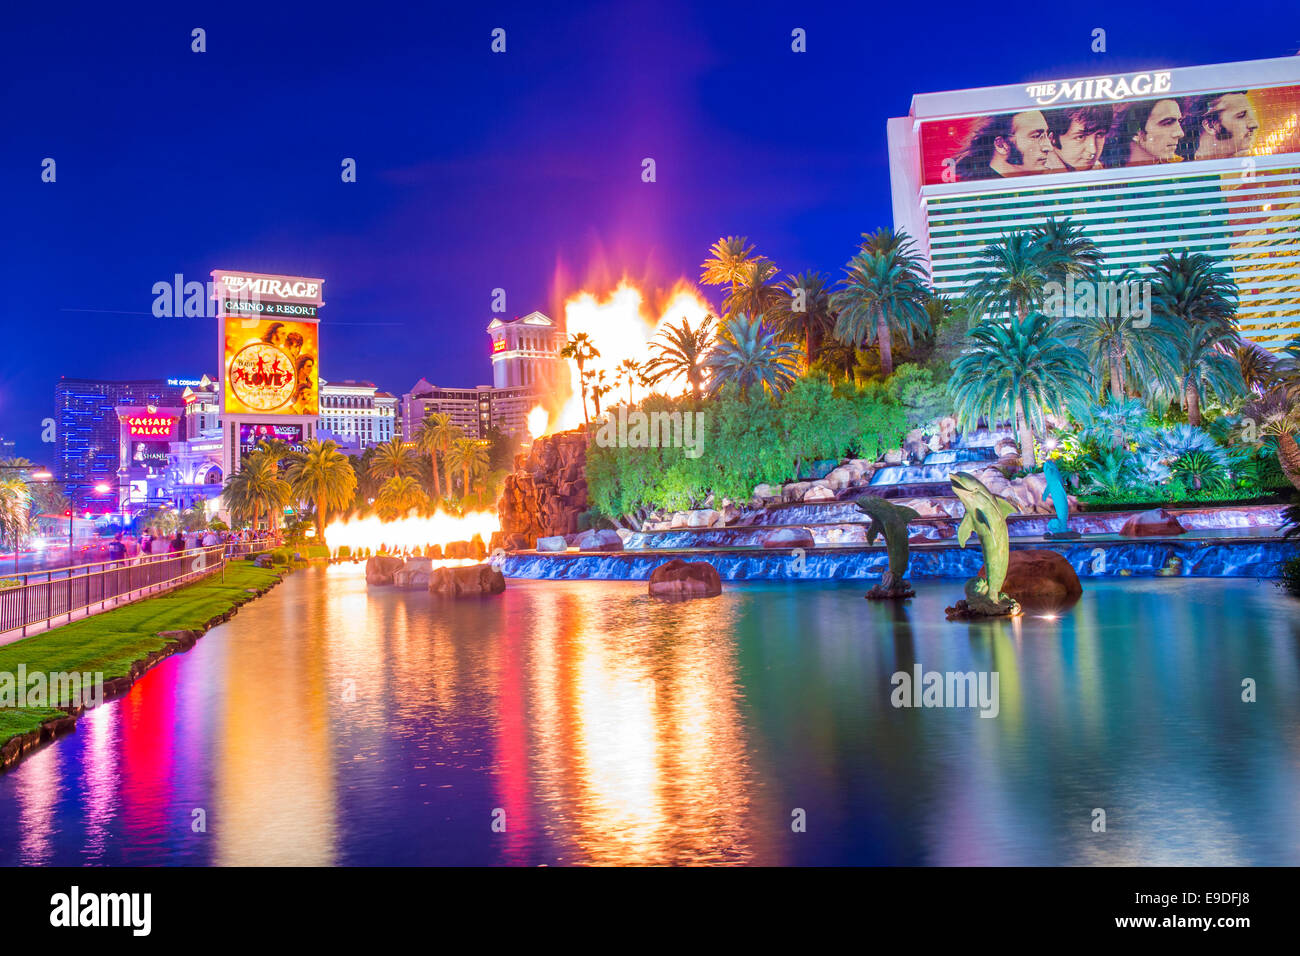 The Mirage Hotel artificial Volcano Eruption show in Las Vegas Stock Photo  - Alamy